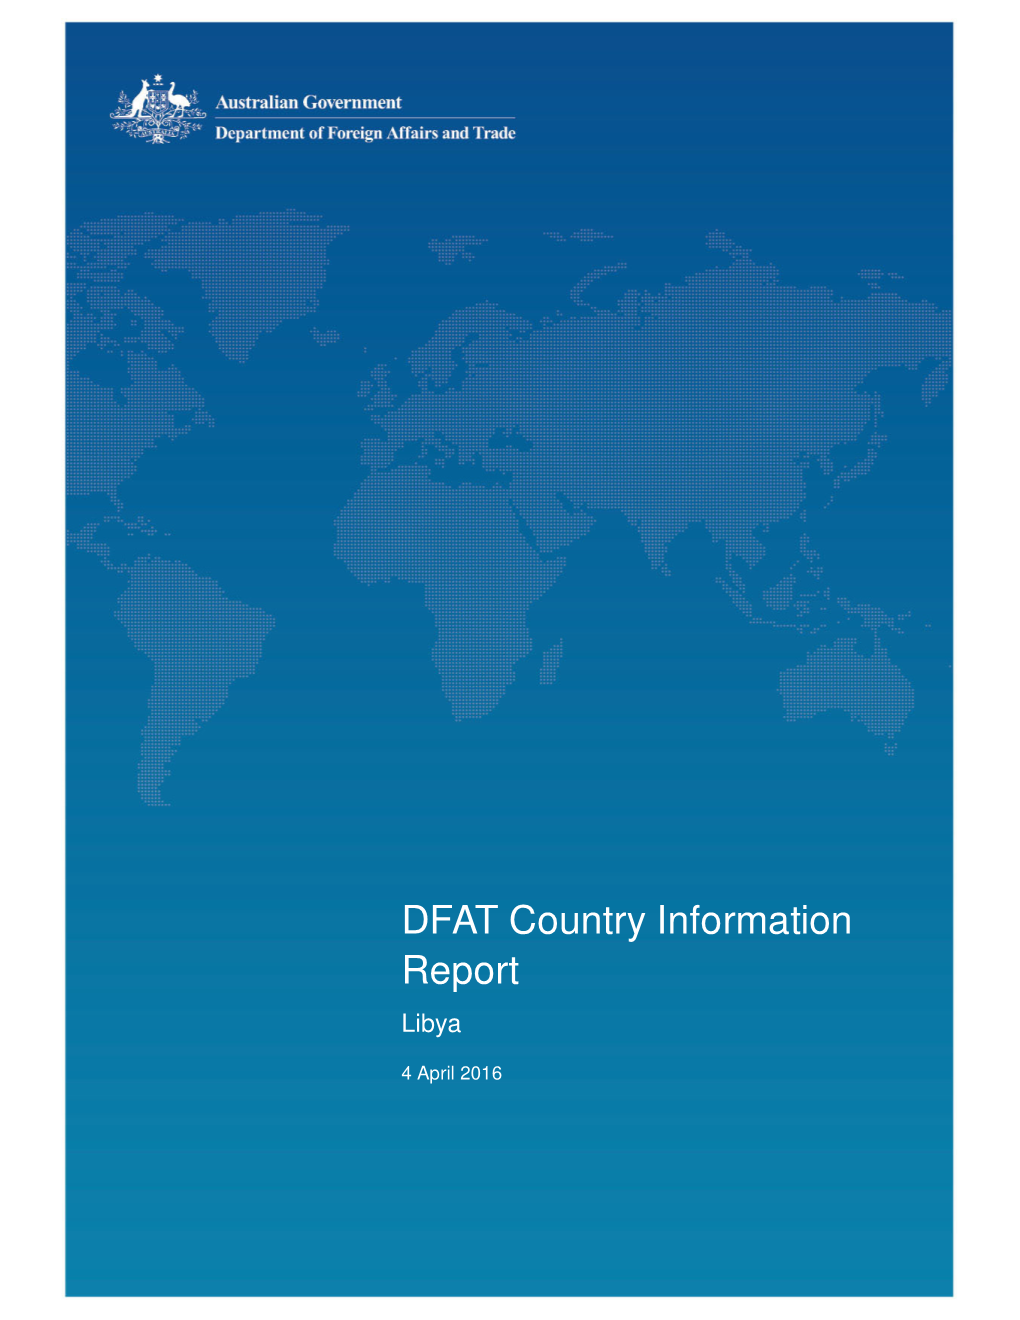 DFAT Country Information Report Libya